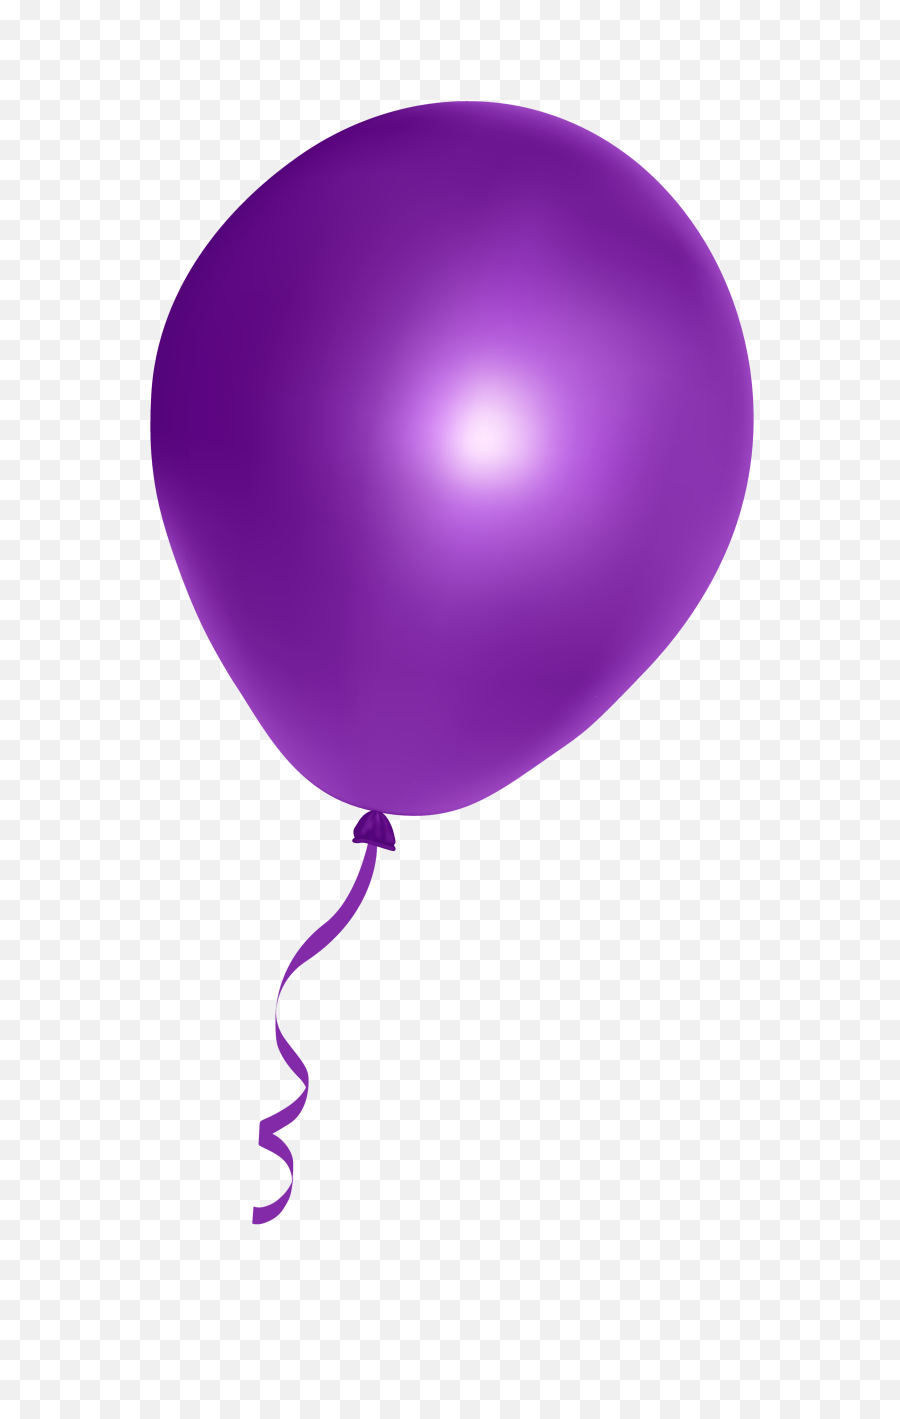 Free Png Transparent Background Images Download - Purple Balloon Transparent Background Free,Balloons Transparent